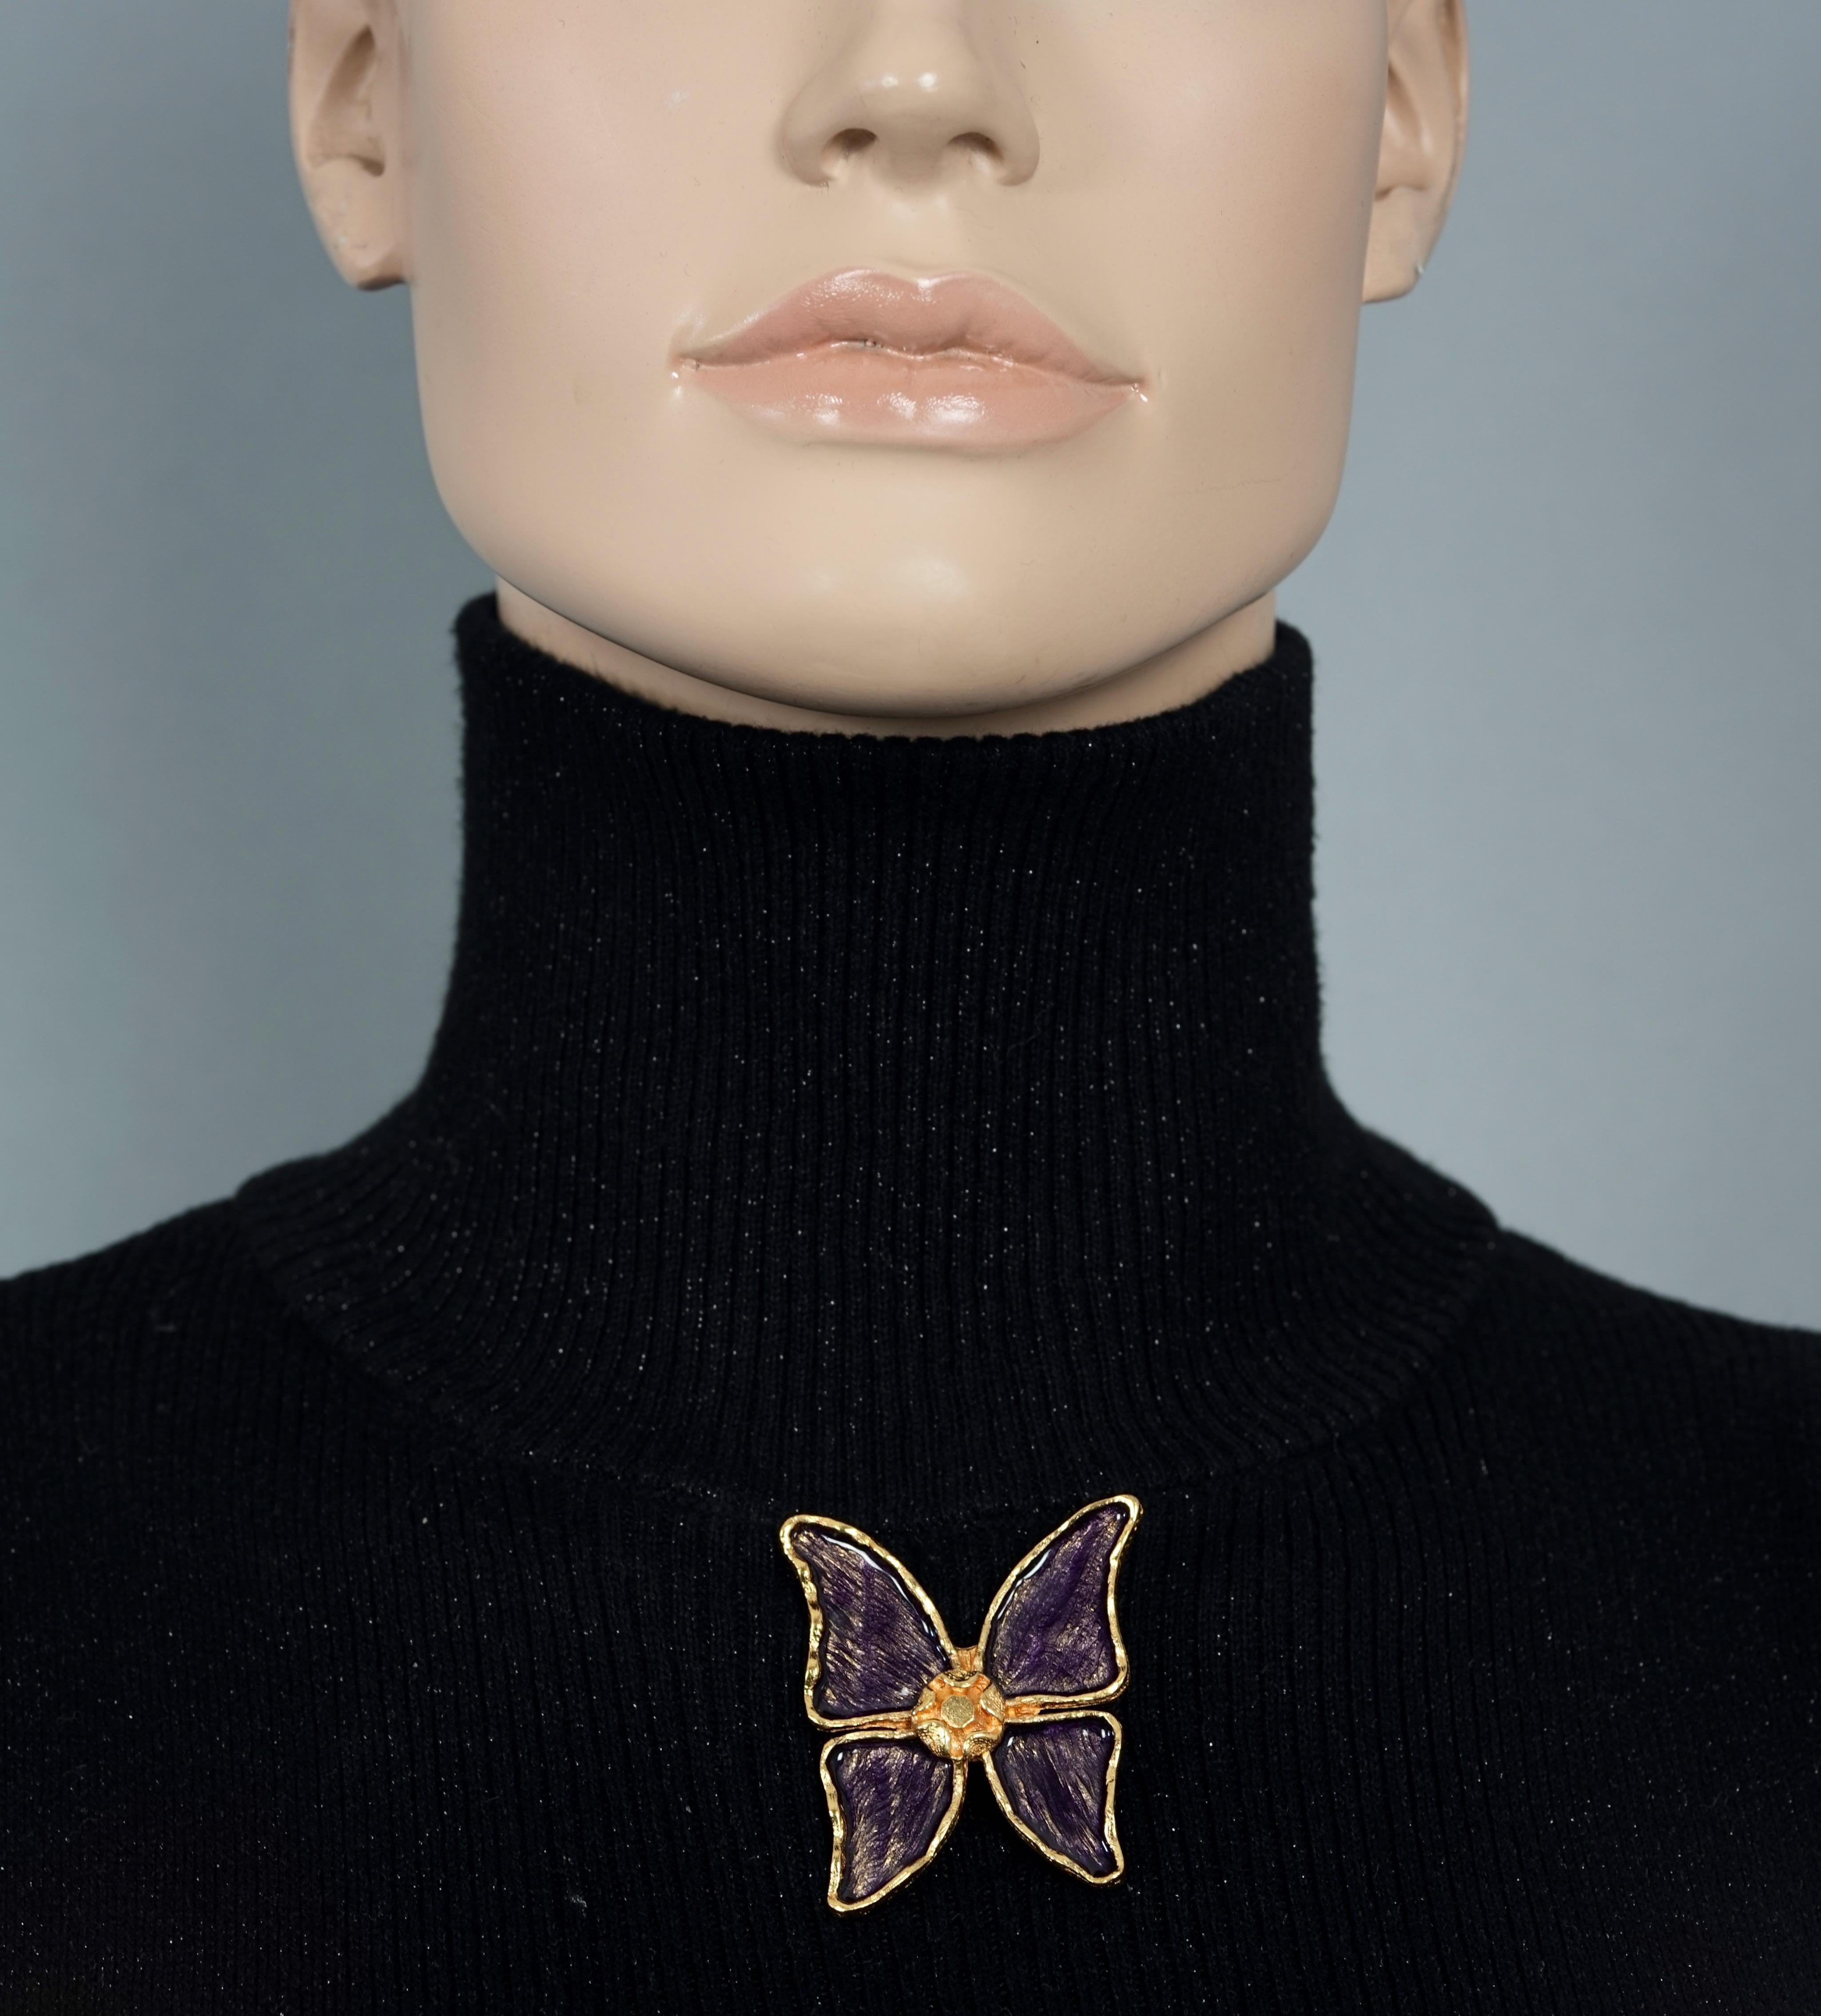 Vintage YVES SAINT LAURENT Ysl Butterfly Enamel Brooch

Measurements:
Height: 2 inches (5.08 cm)
Width: 1.75 inches (4.44 cm)

Features:
- 100% Authentic YVES SAINT LAURENT.
- Butterfly brooch in violet enamel.
- Gold tone hardware.
- Signed YSL